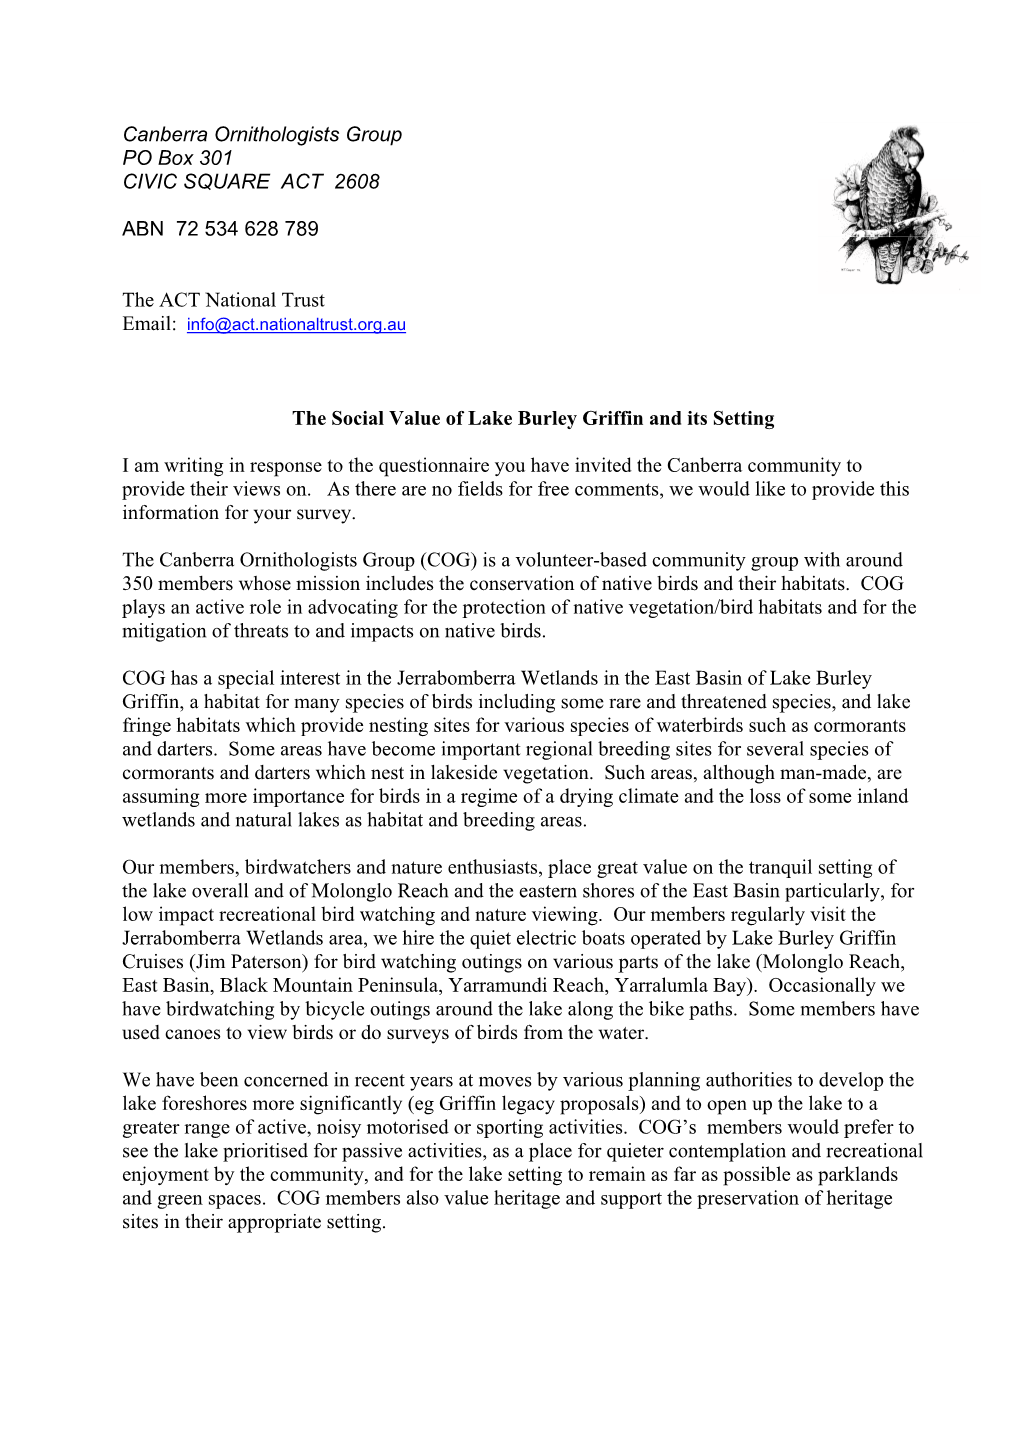 National Trust Letter – Social Value Lake Burley Griffin, February 2009